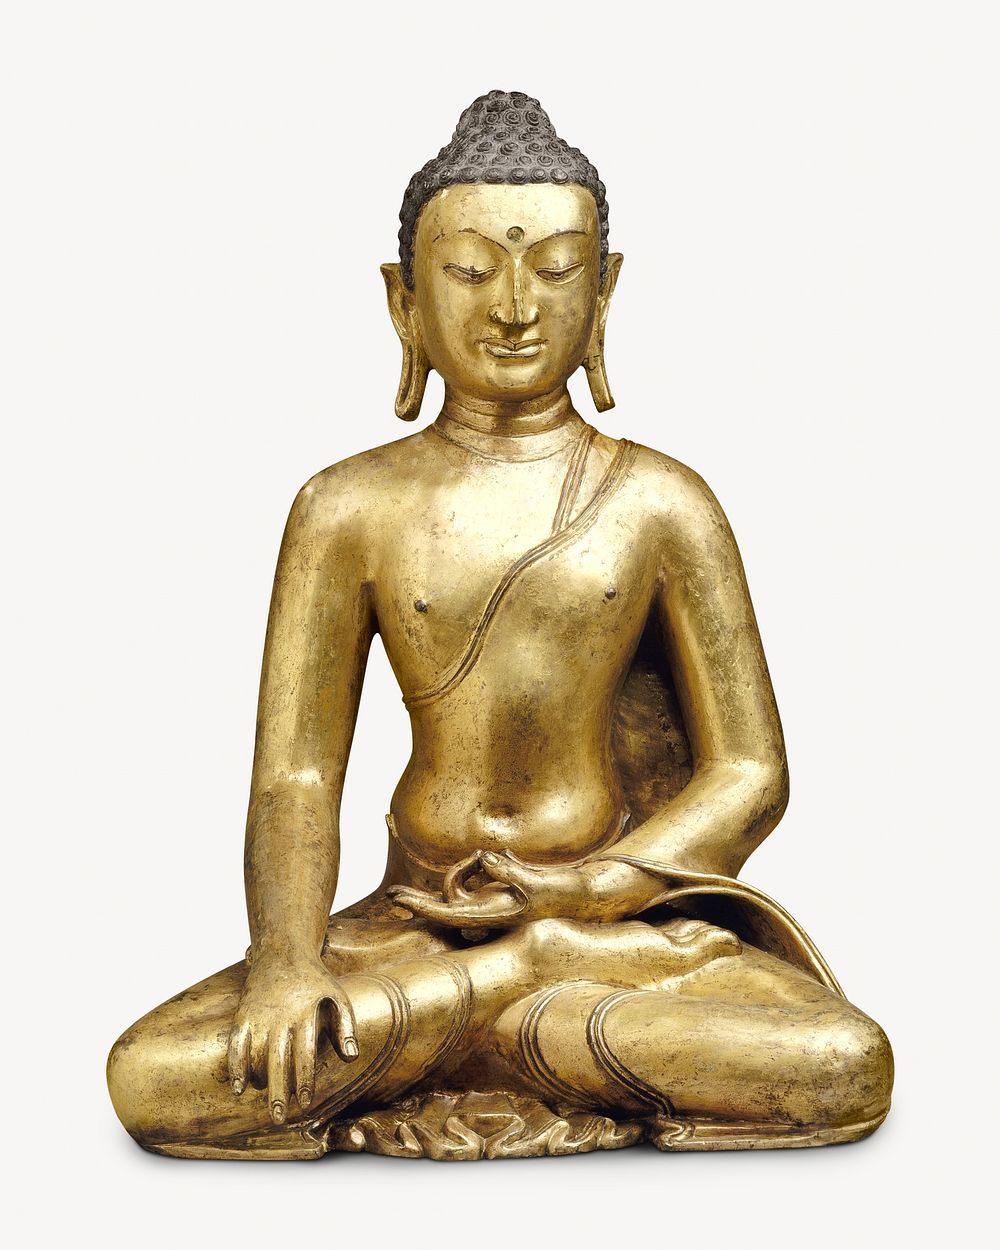 Buddha Shakyamuni or Akshobhya, the Buddha of the East. Remixed by rawpixel.